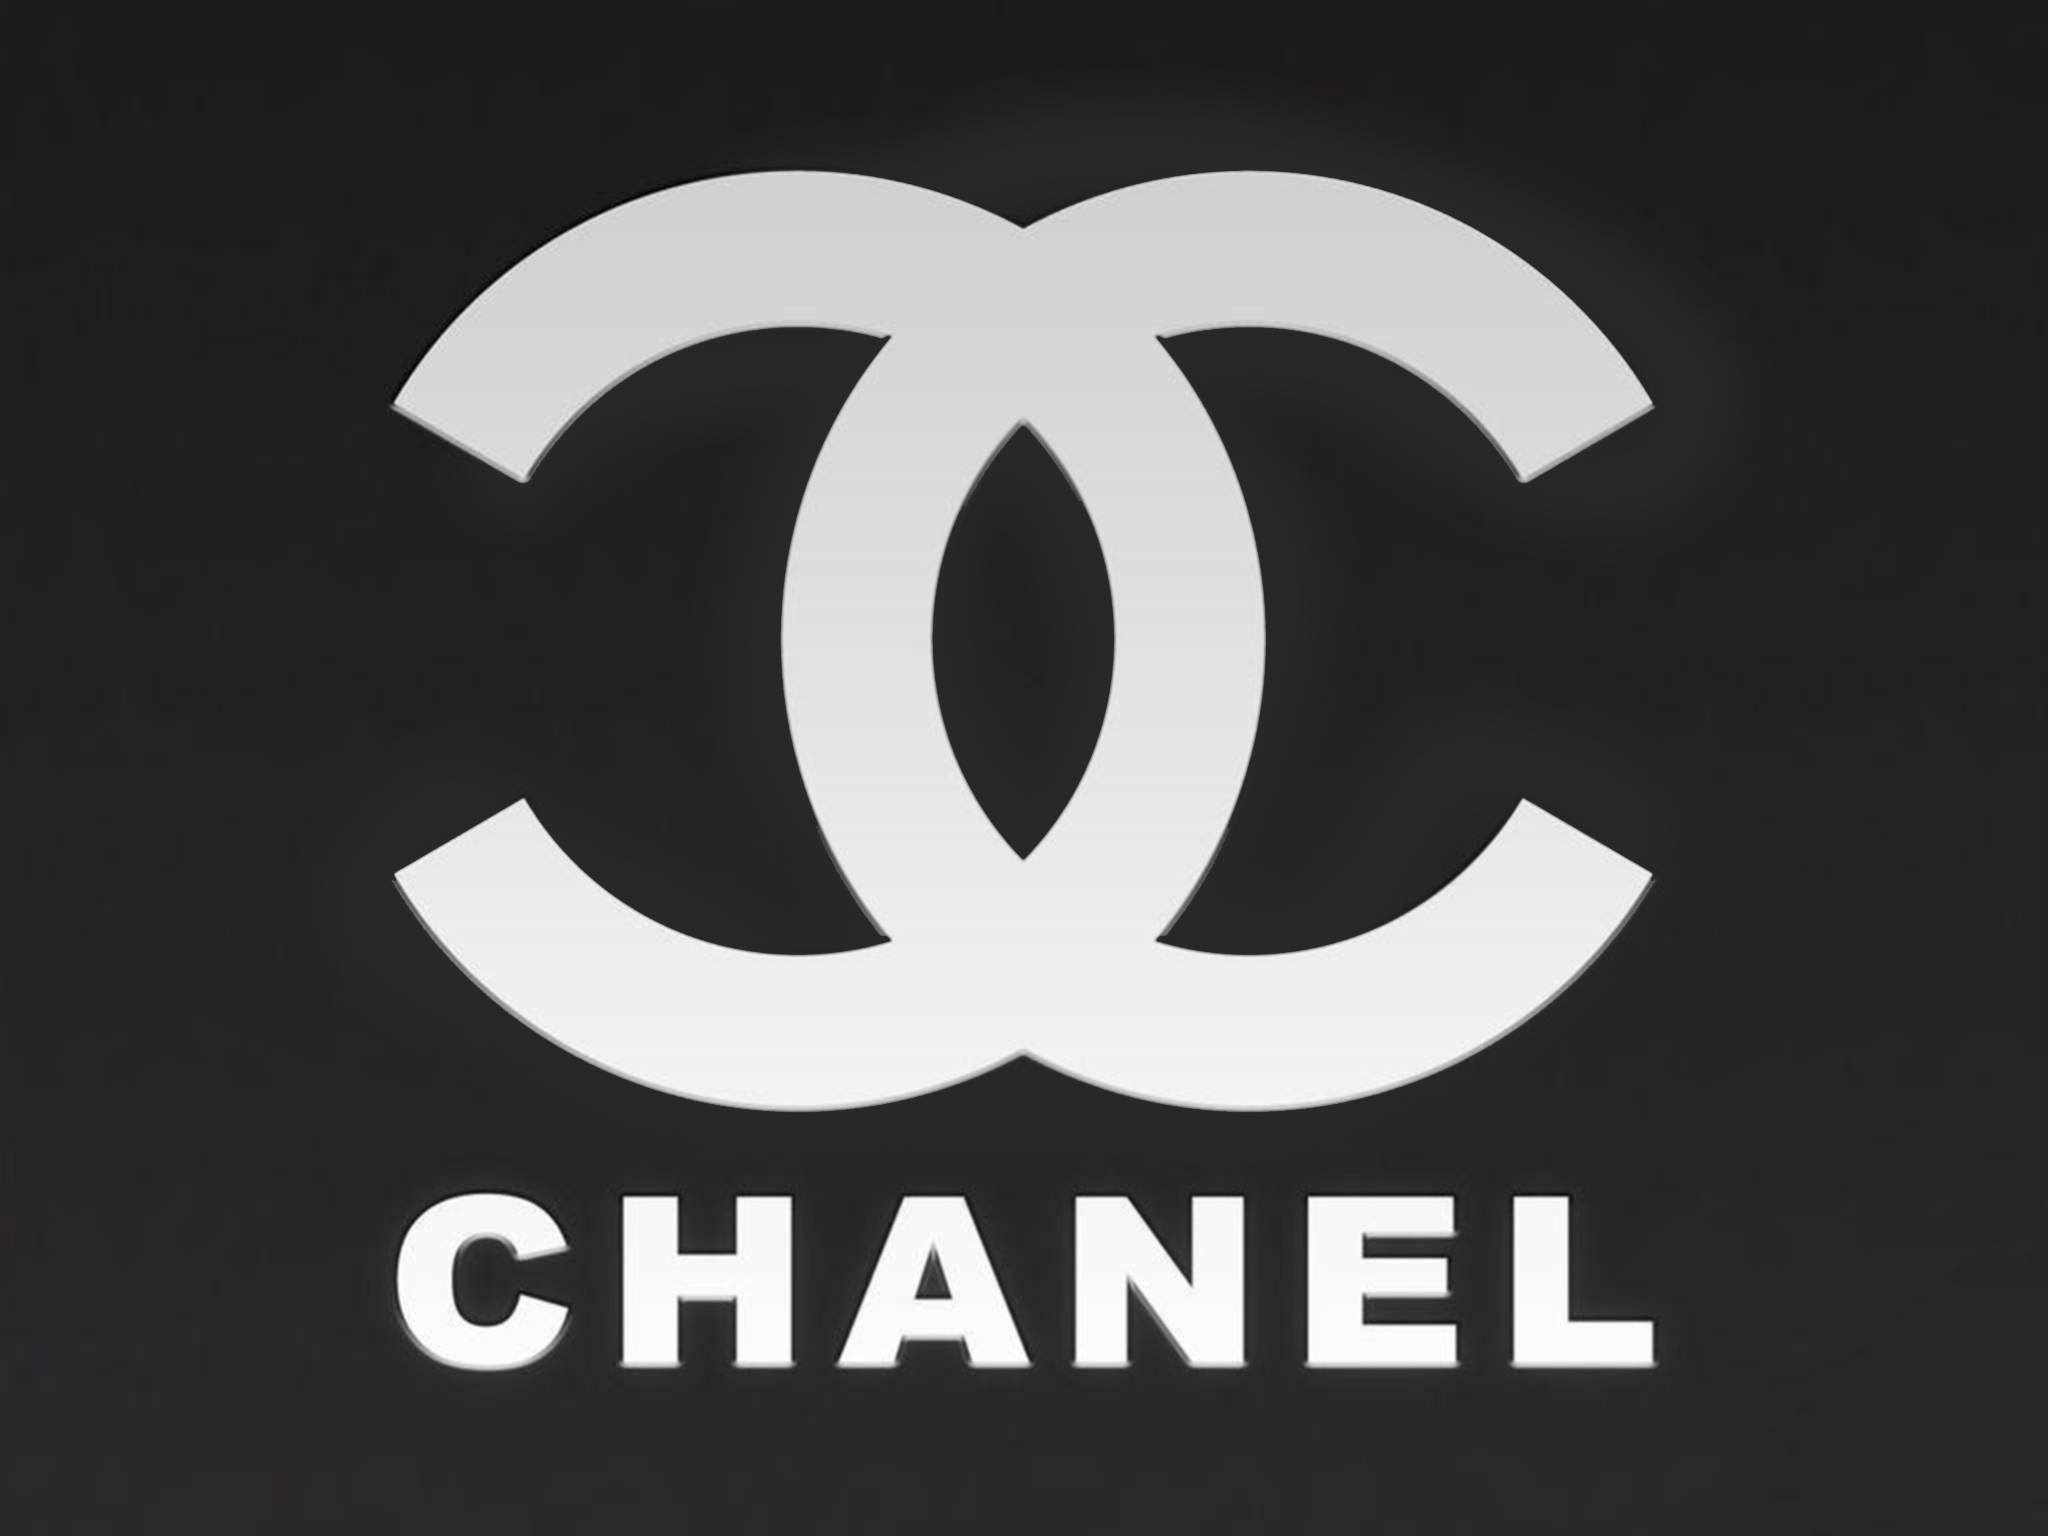 Download Chanel Logo Black Background Wallpaper | Wallpapers.com